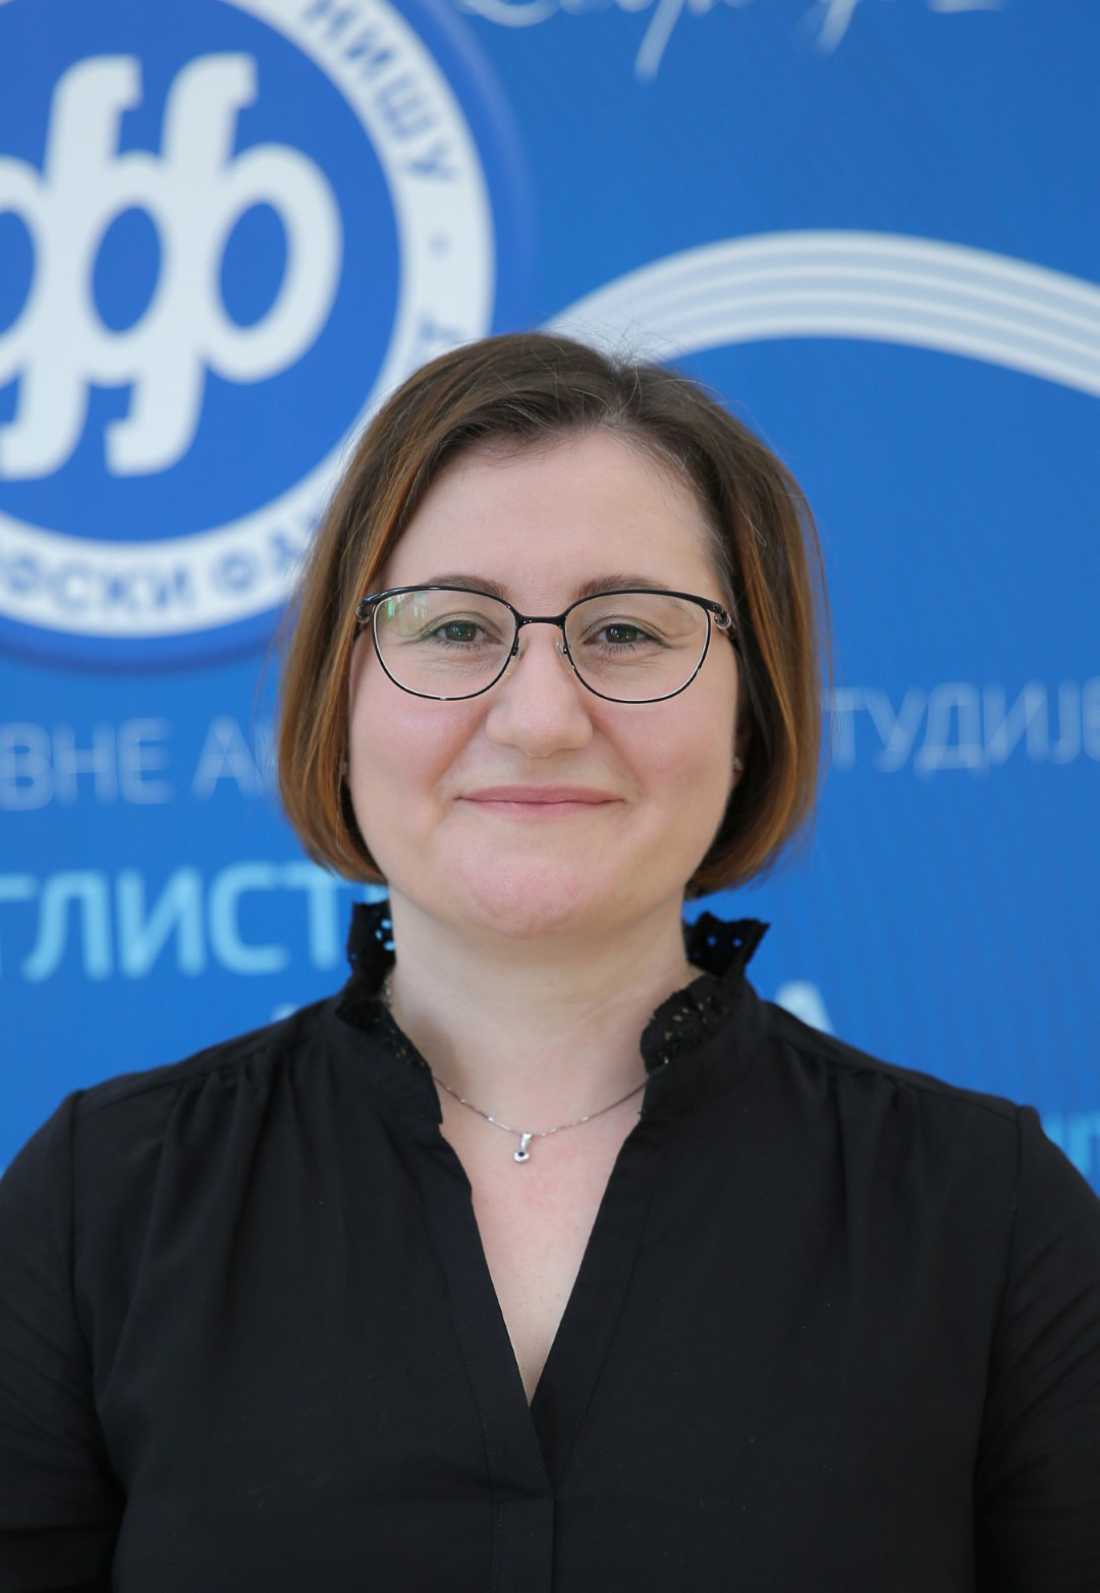 Марта Величковић, Департман за англистику, Филозофски факултет